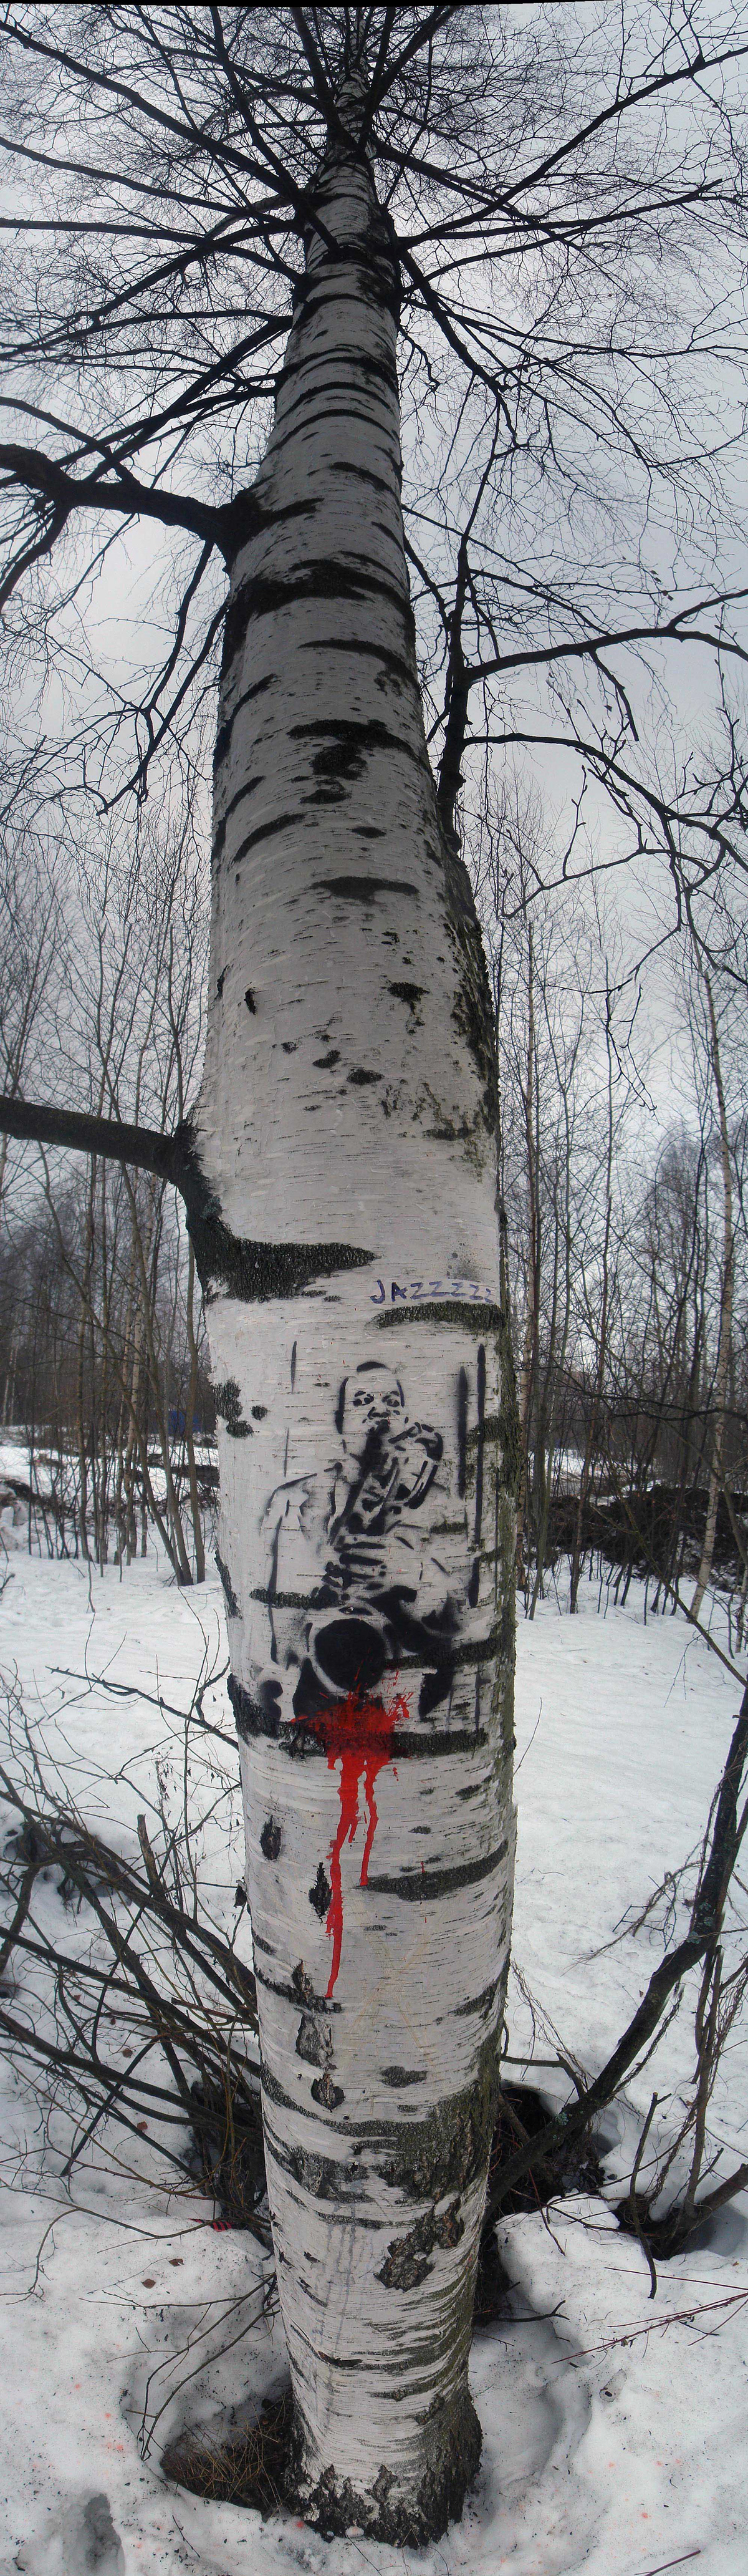 Graffiti стритарт стрит арт граффити медведь санкт-петербург питер рисунок power